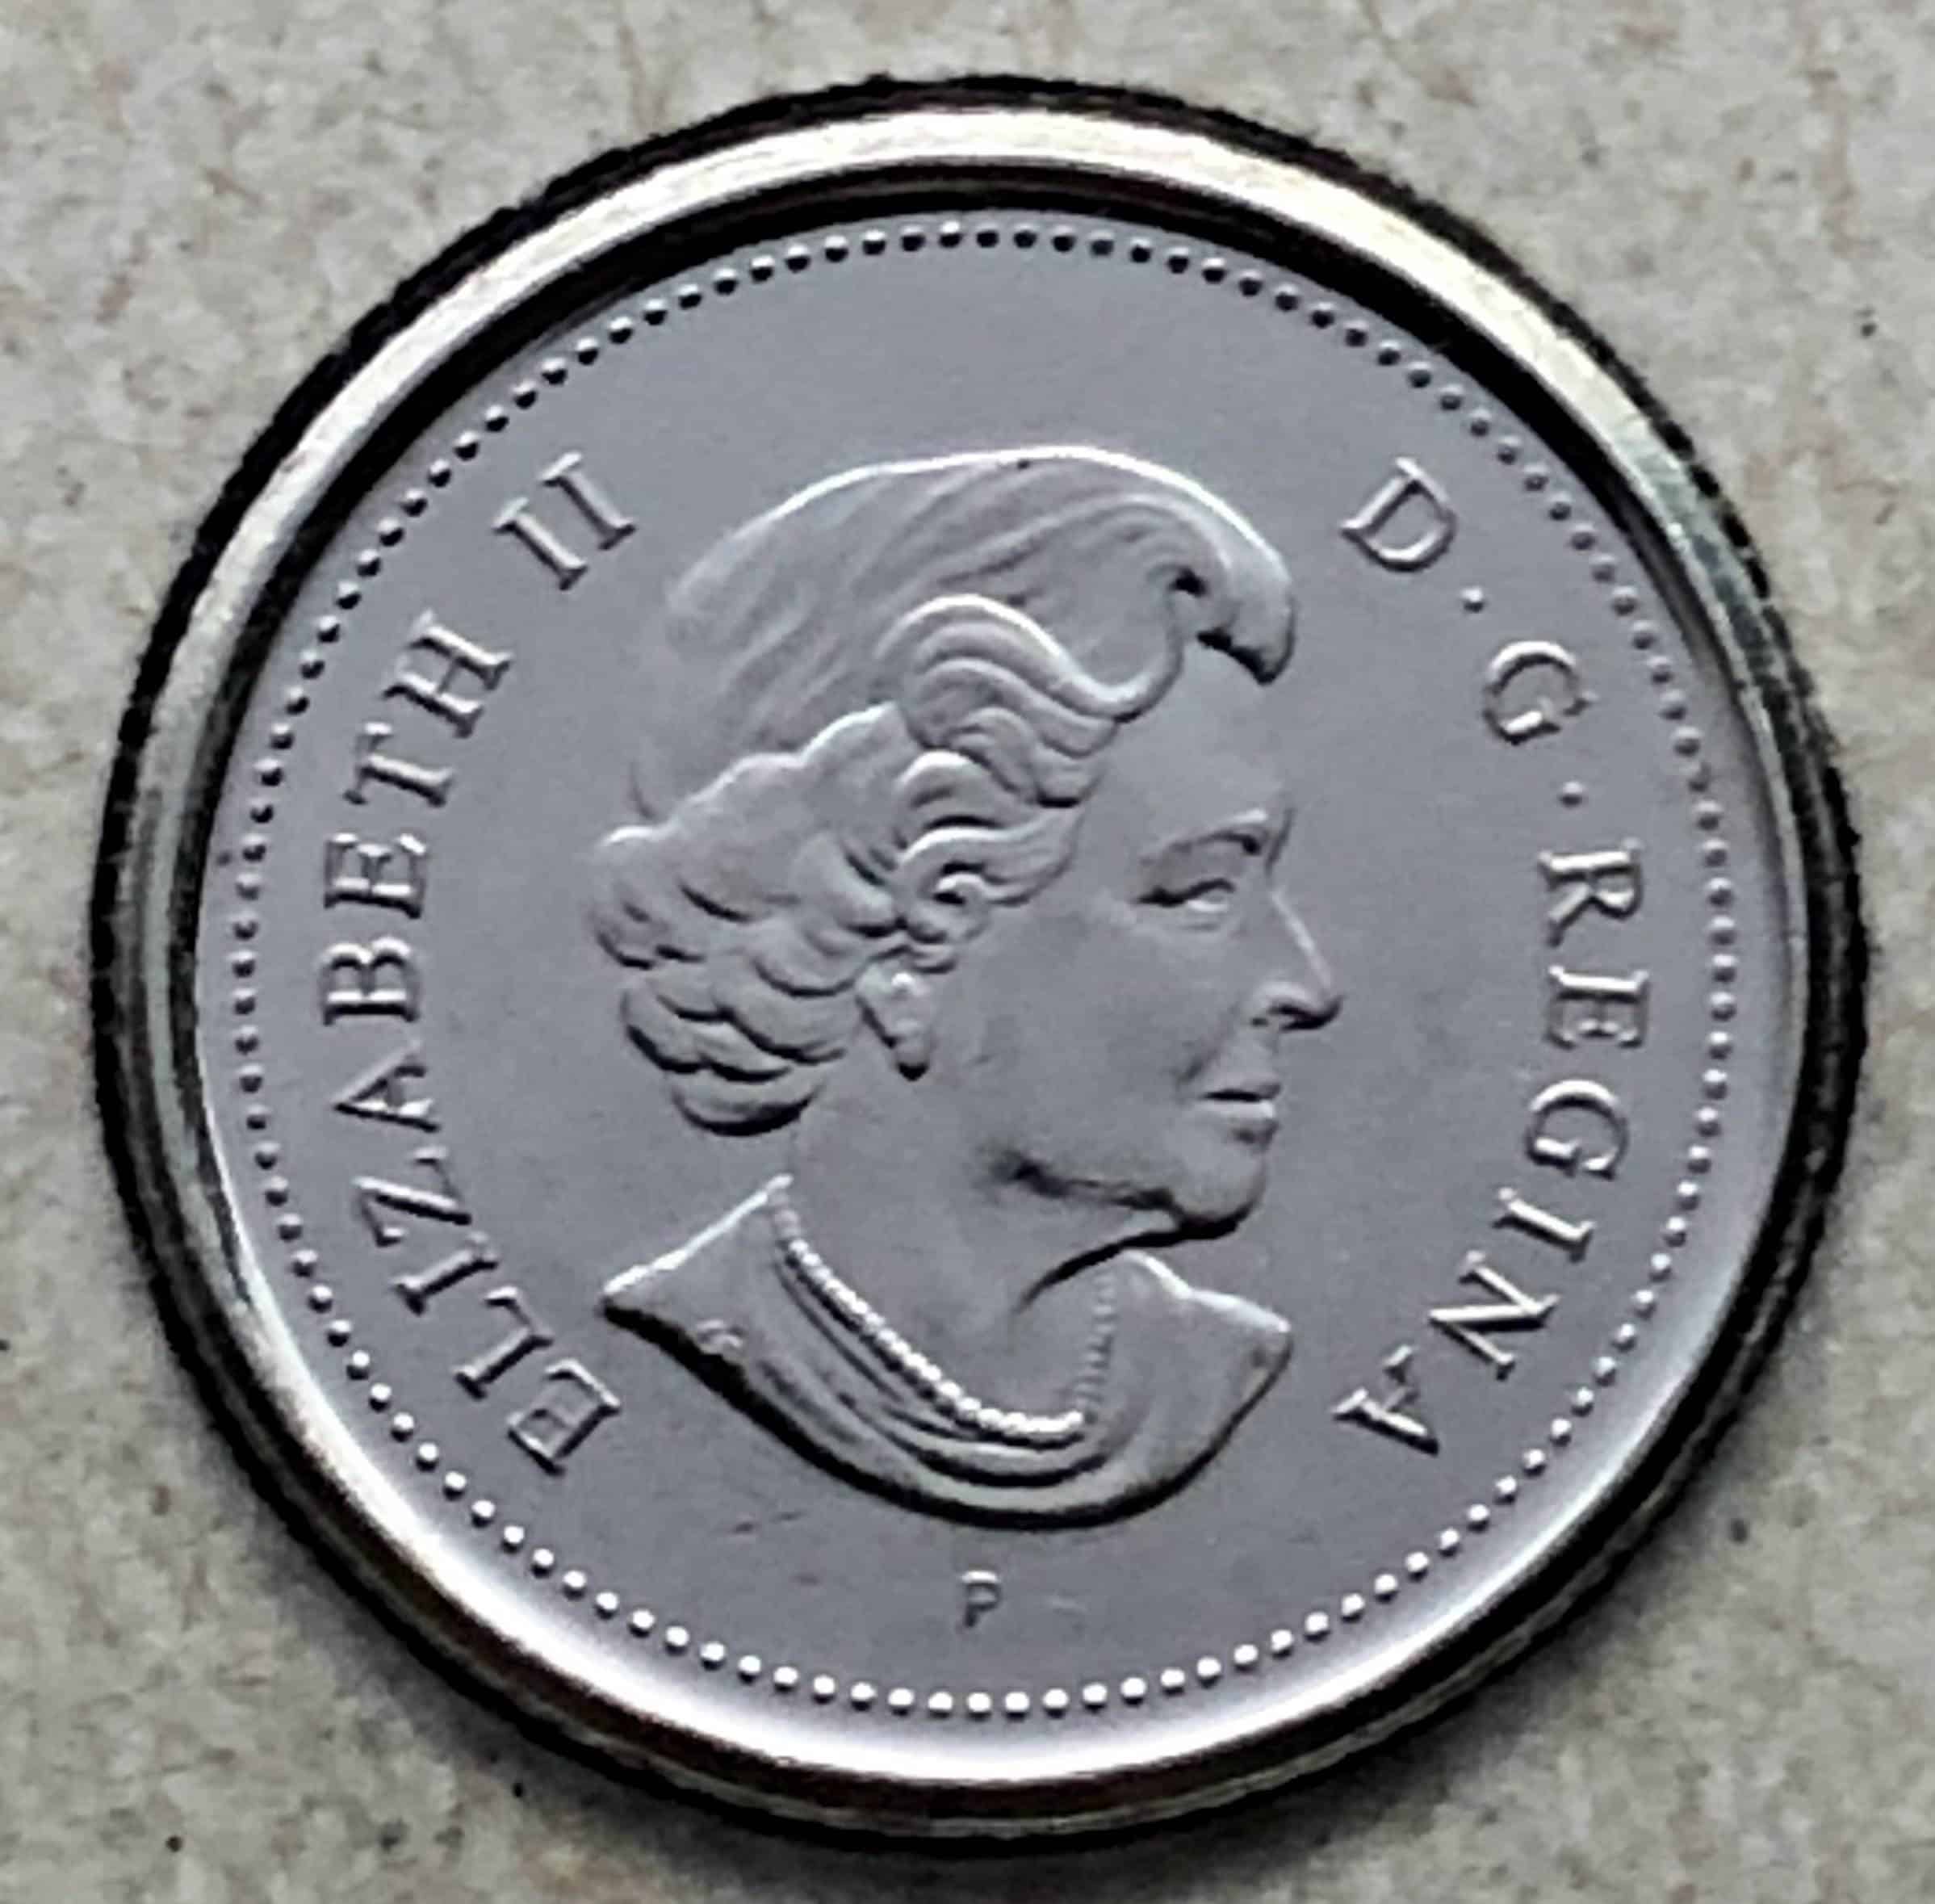 Canada - 10 cents 2004P - B.UNC